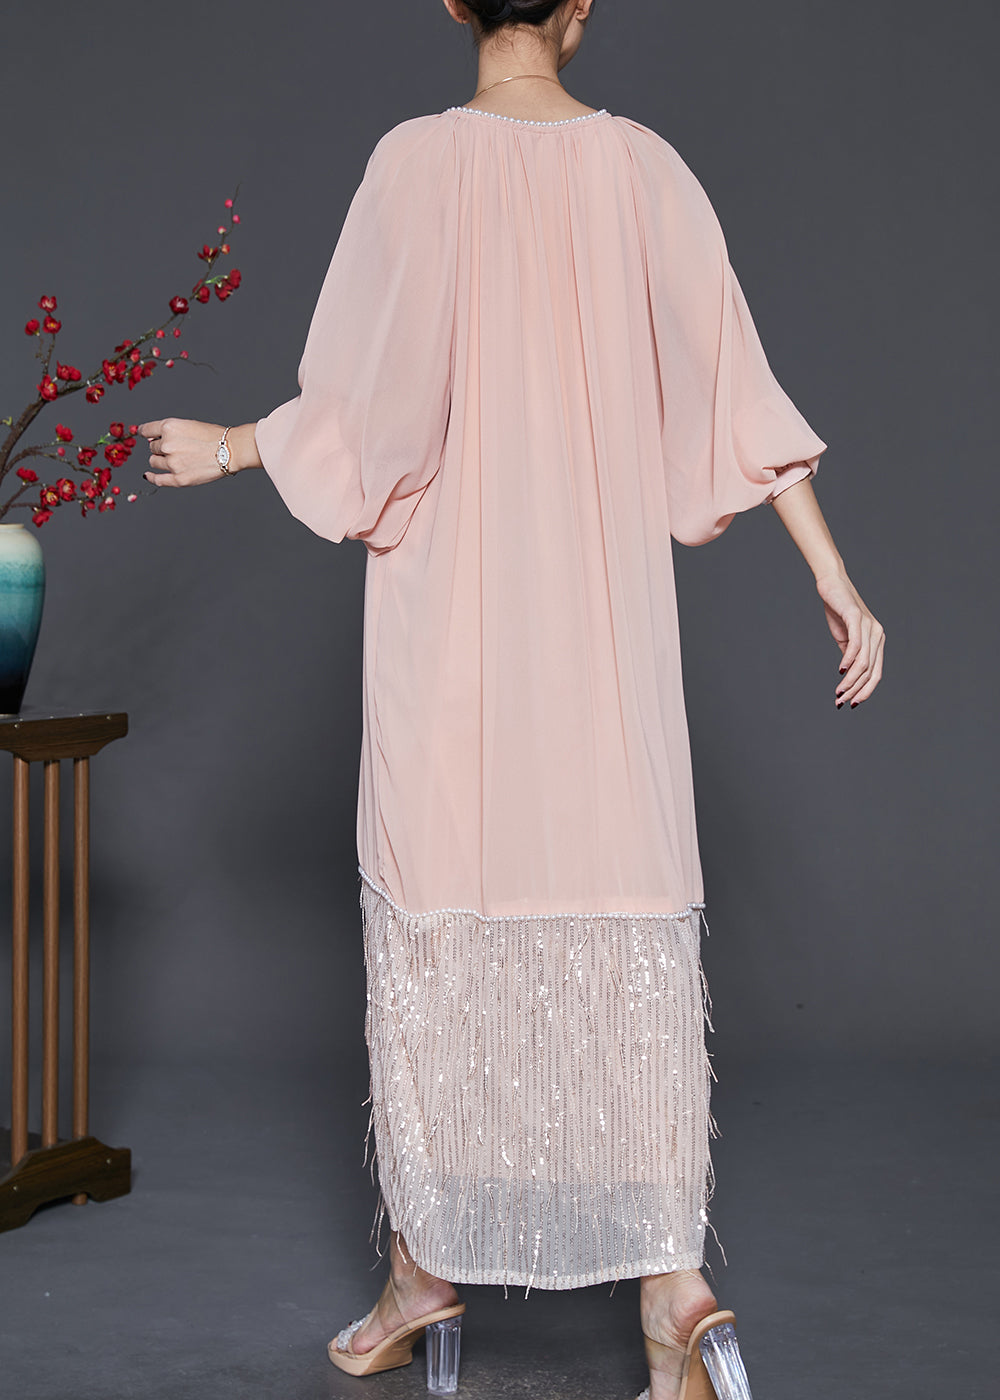 Art Pink Tasseled Patchwork Chiffon Ankle Dress Spring